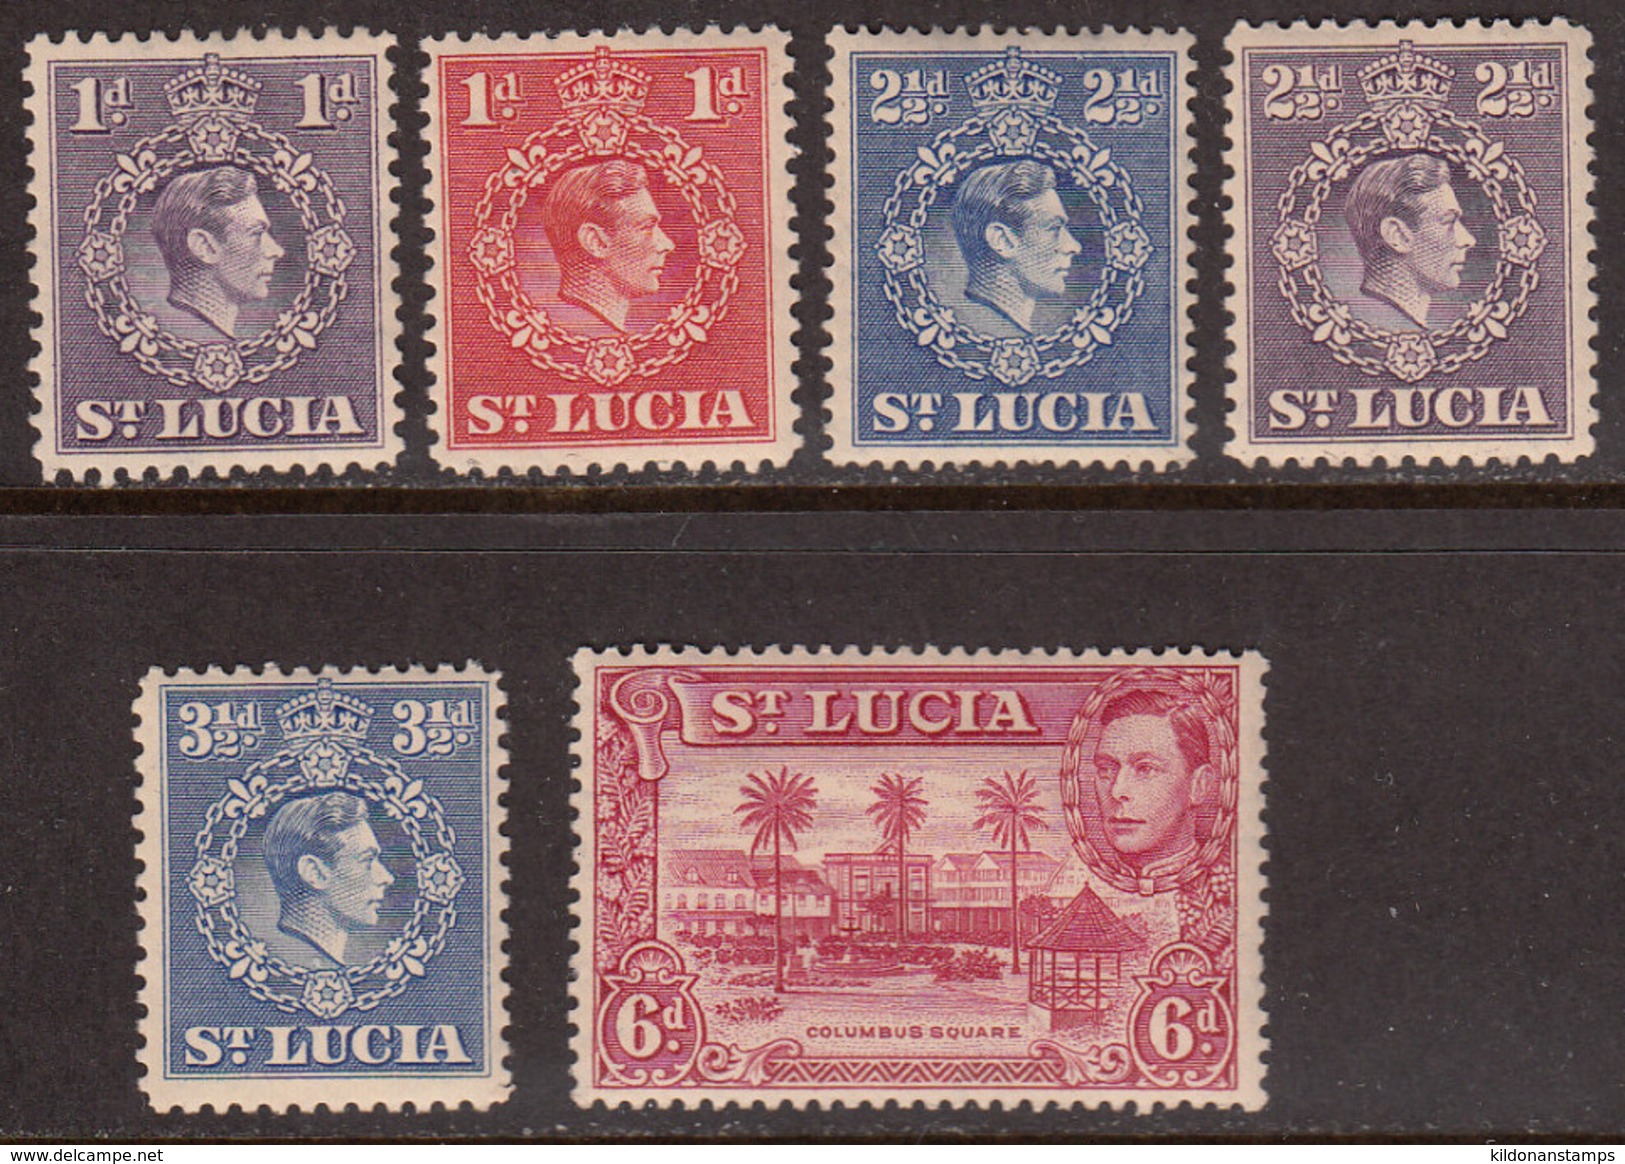 St Lucia 1938-48 Mint Mounted Sc# / SG 129a,129b,132,132b,133b,134 (perf 13.5) - Ste Lucie (...-1978)